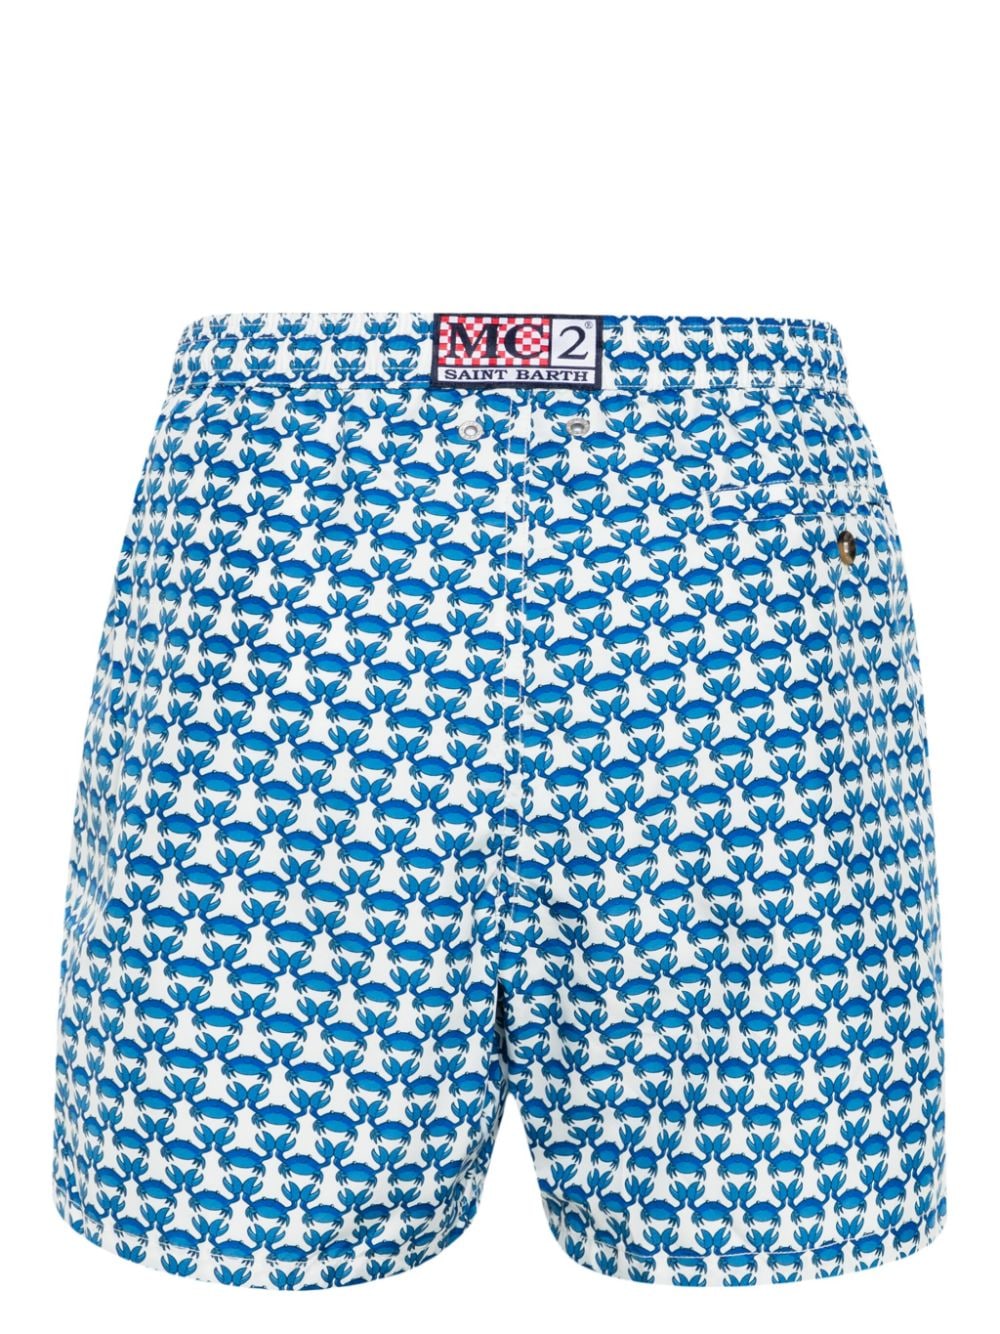 Crabs-print swim shorts